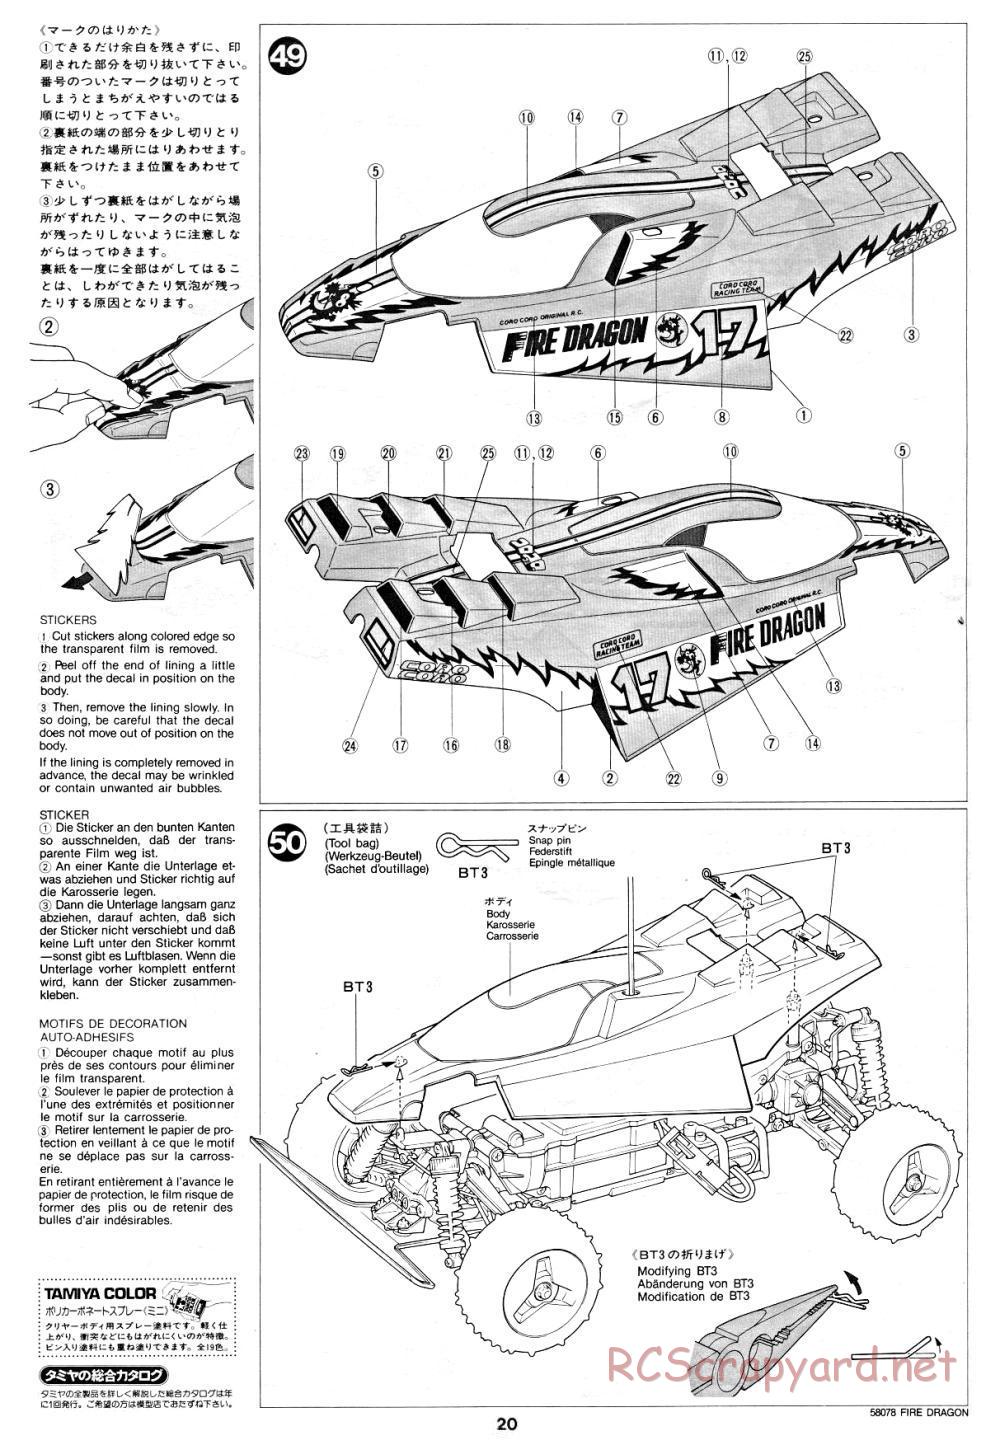 Tamiya - Fire Dragon - 58078 - Manual - Page 20